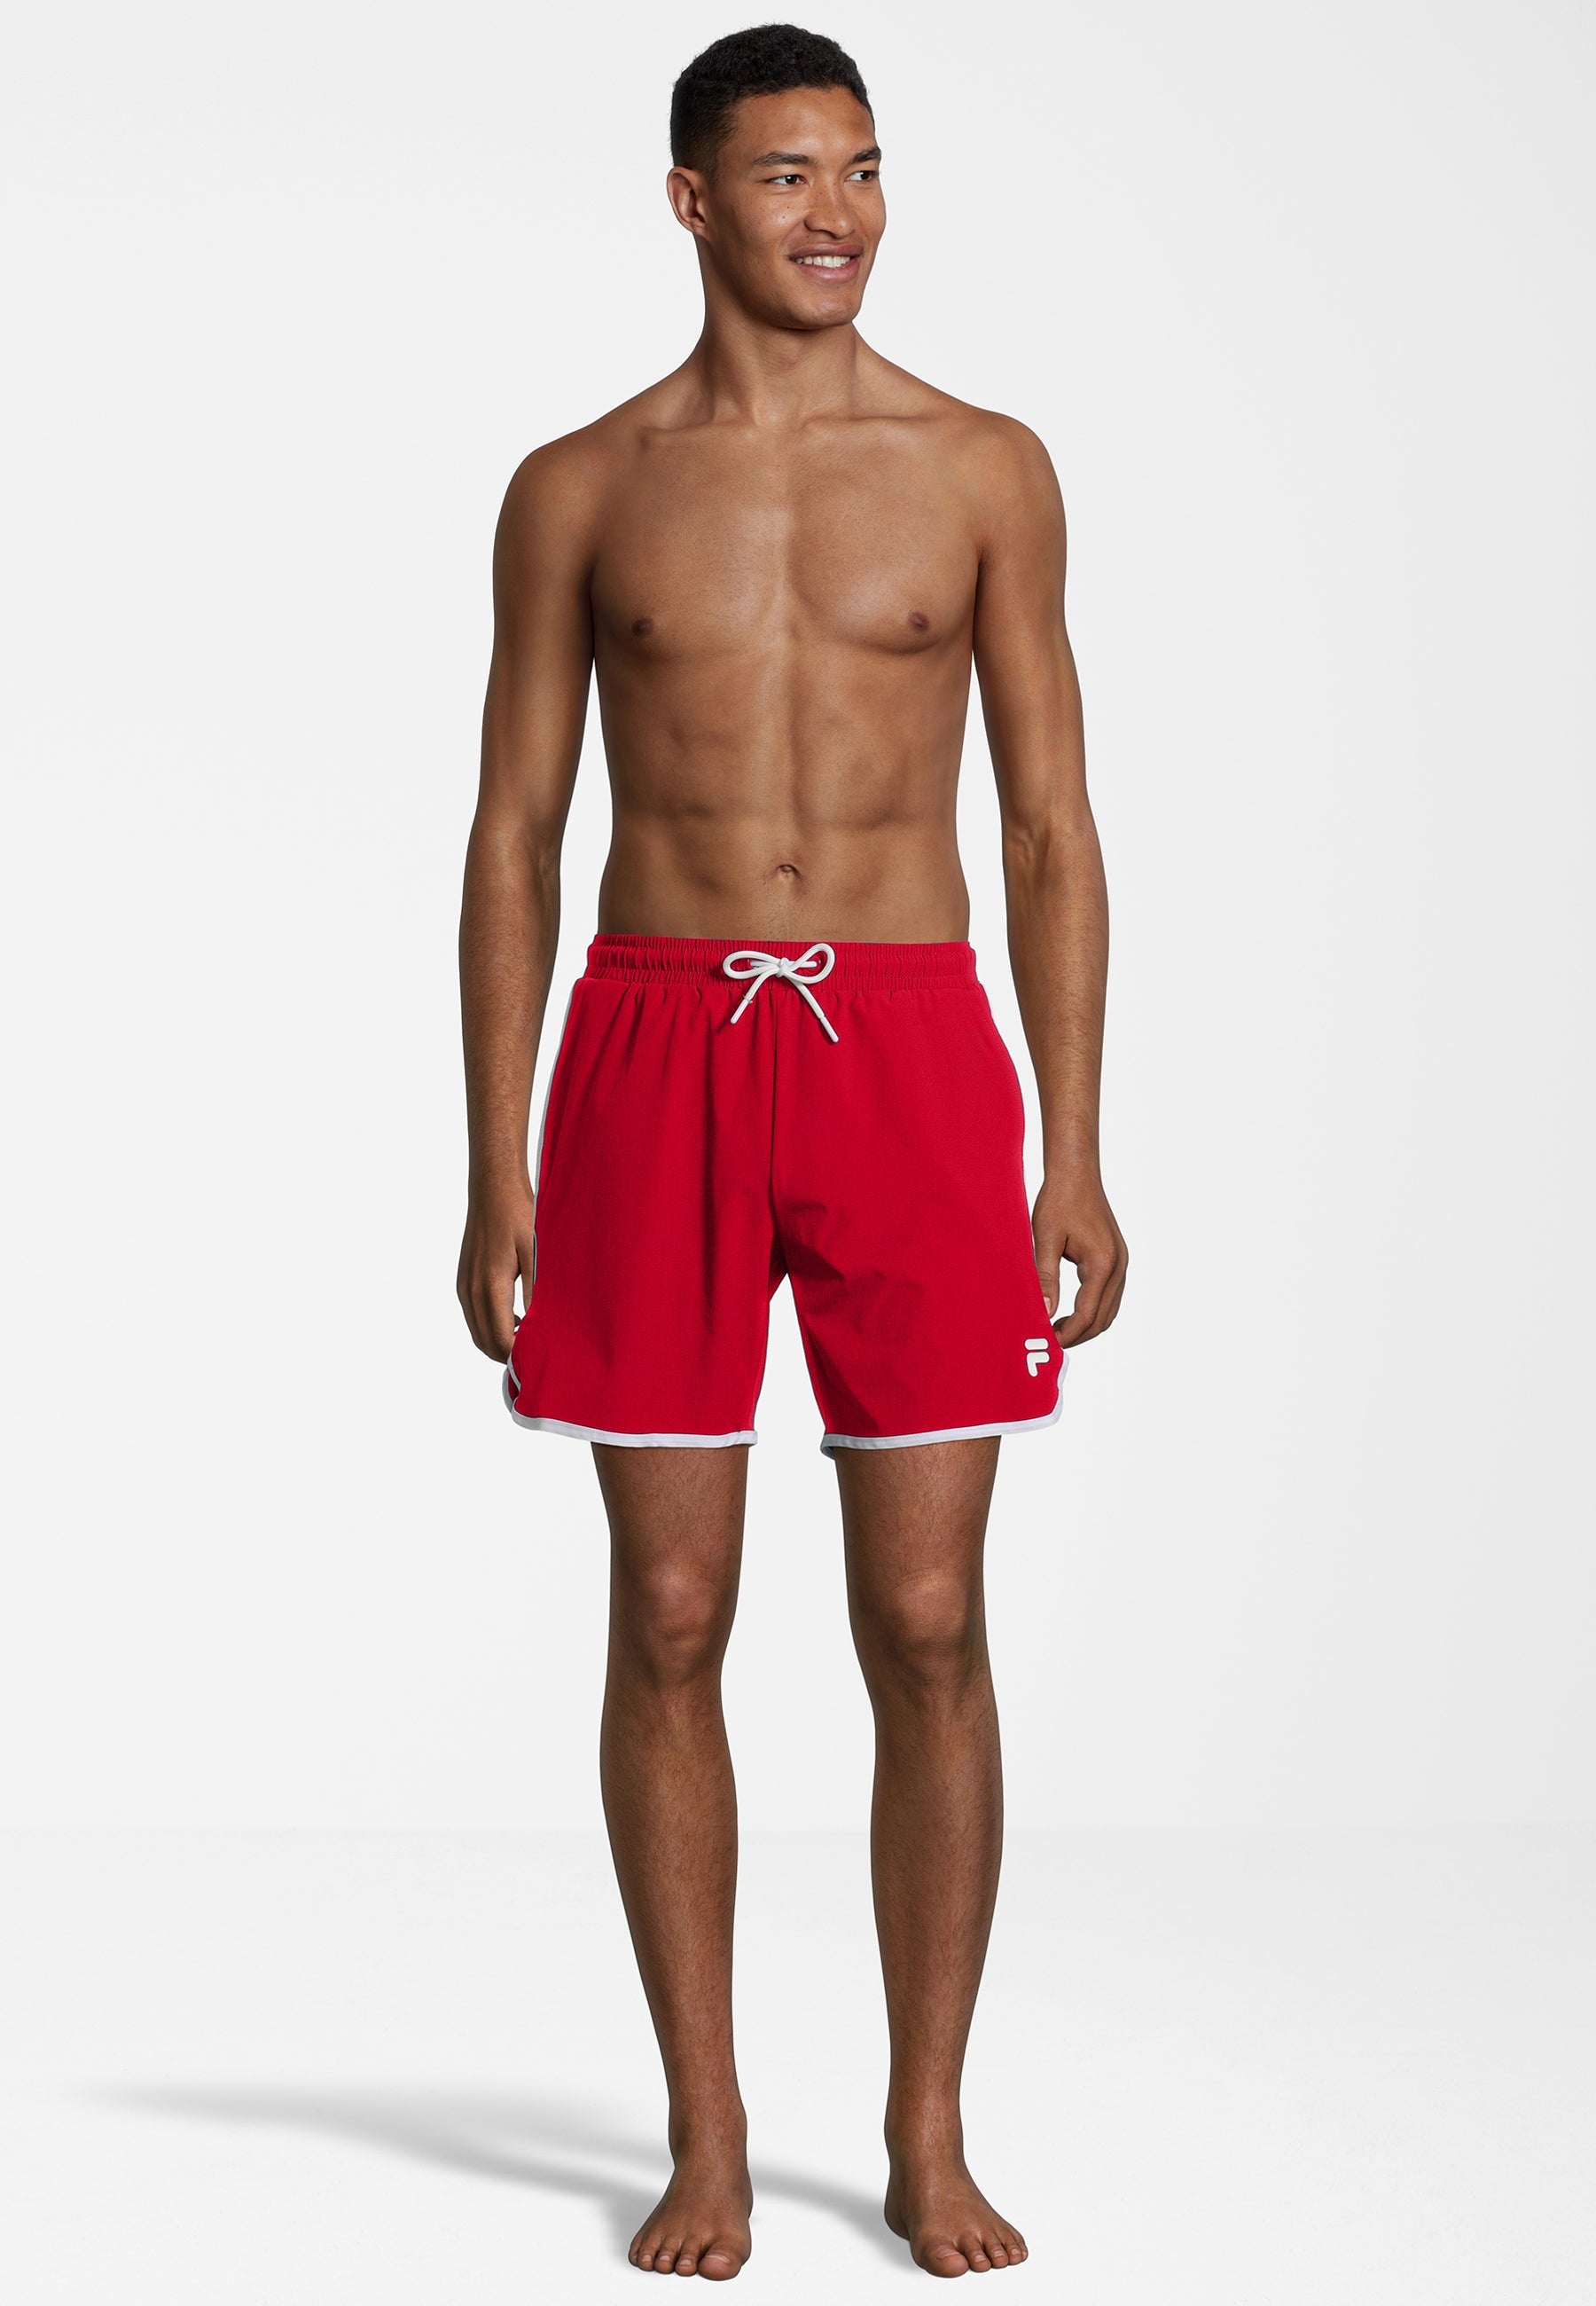 Scilla Beach Shorts in True Red Badehosen Fila   